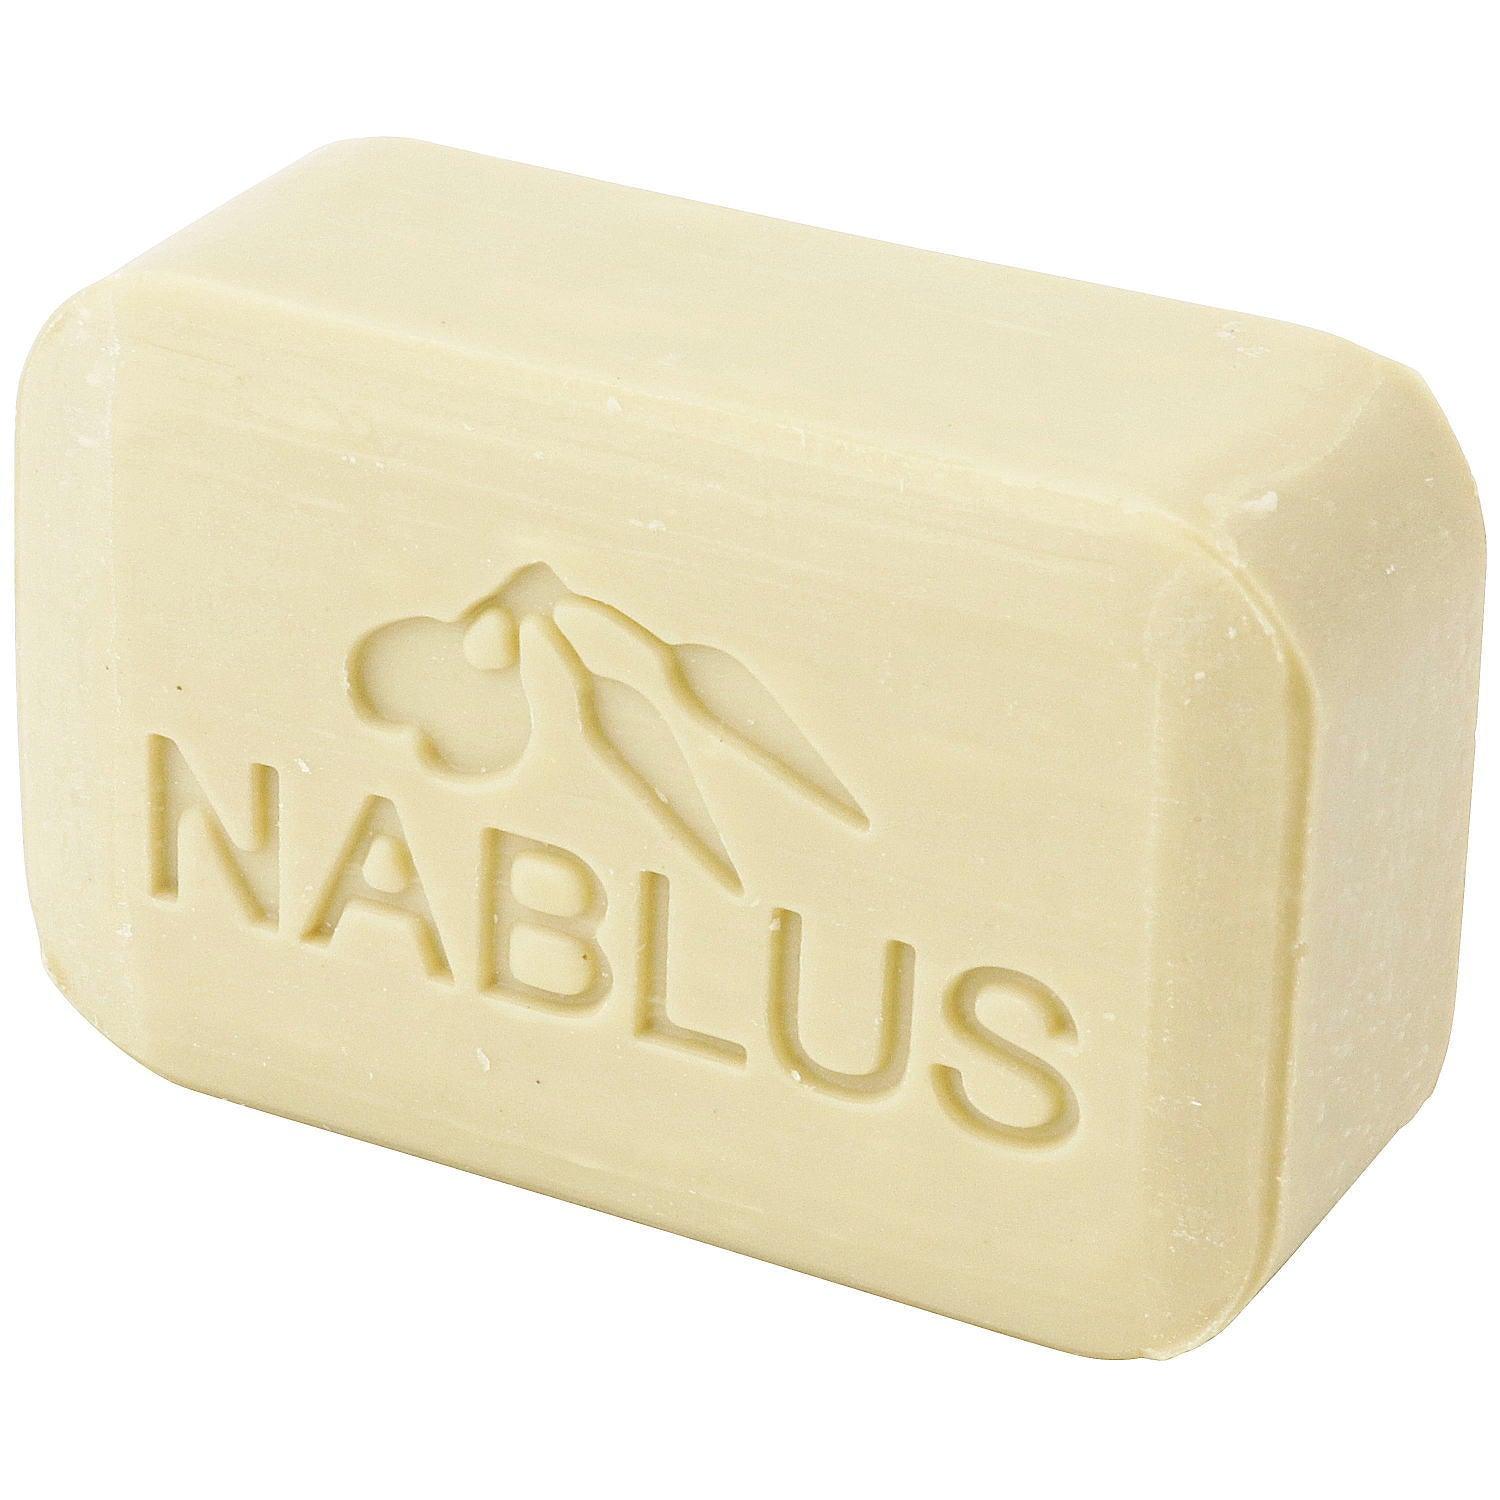 NABLUS SOAP ナーブルスソープ 無添加 完全オーガニック石鹸（ぶどう）ハリ・弾力 100g - YOUR ORGANICS